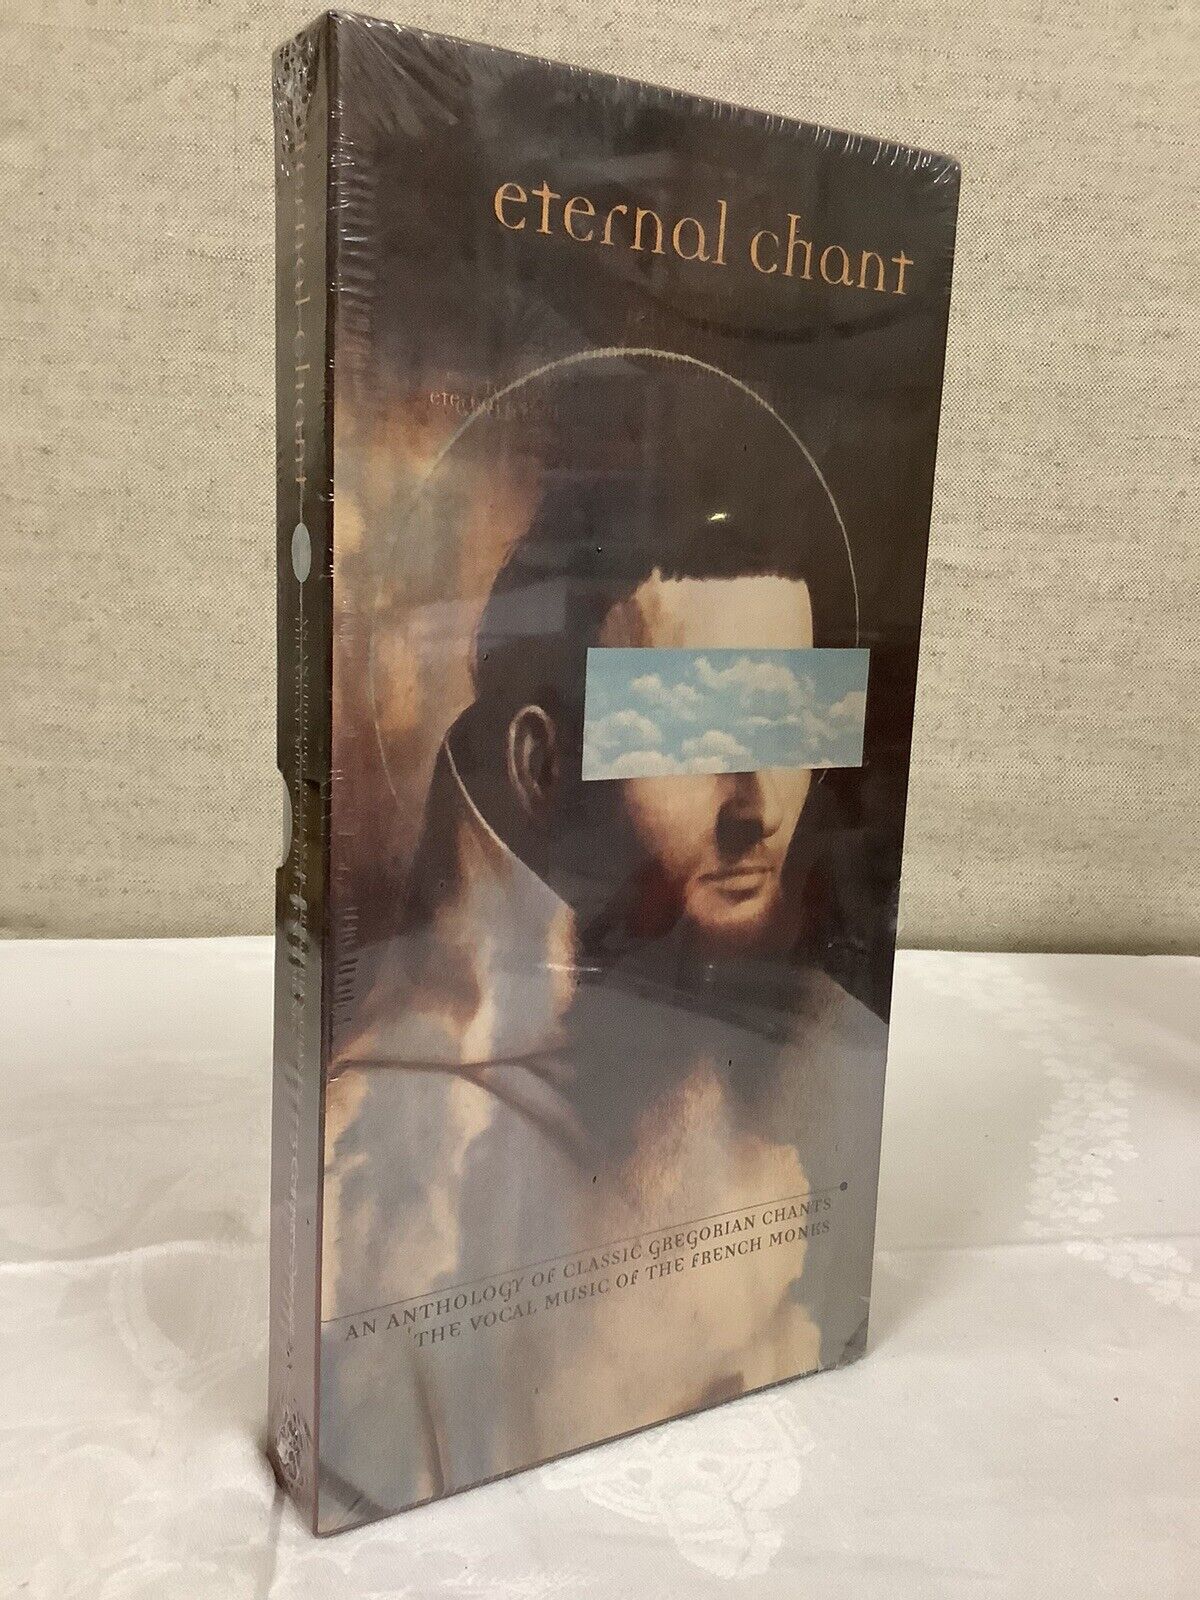 075678270321, Eternal Chant, Anthology Of Classic Gregoria’s Chants, 3 Cd Set